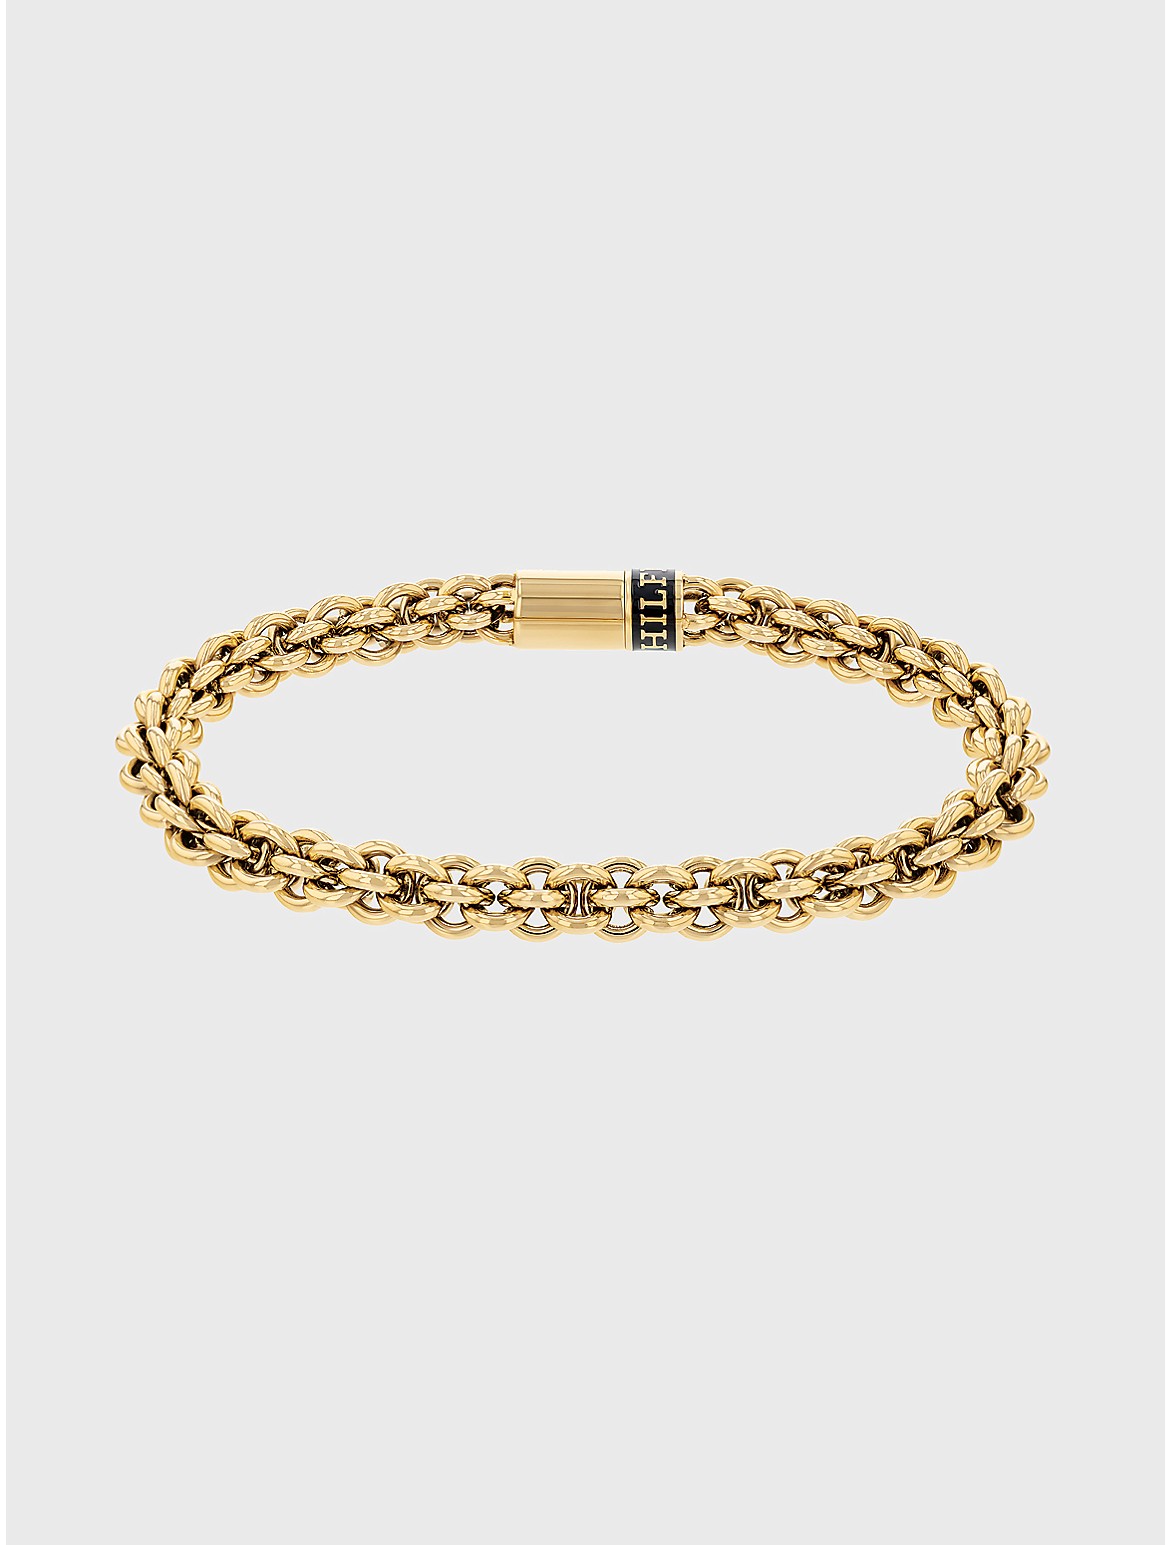 Tommy Hilfiger Men's Gold-Tone Intertwined Chain Bracelet - Metallic